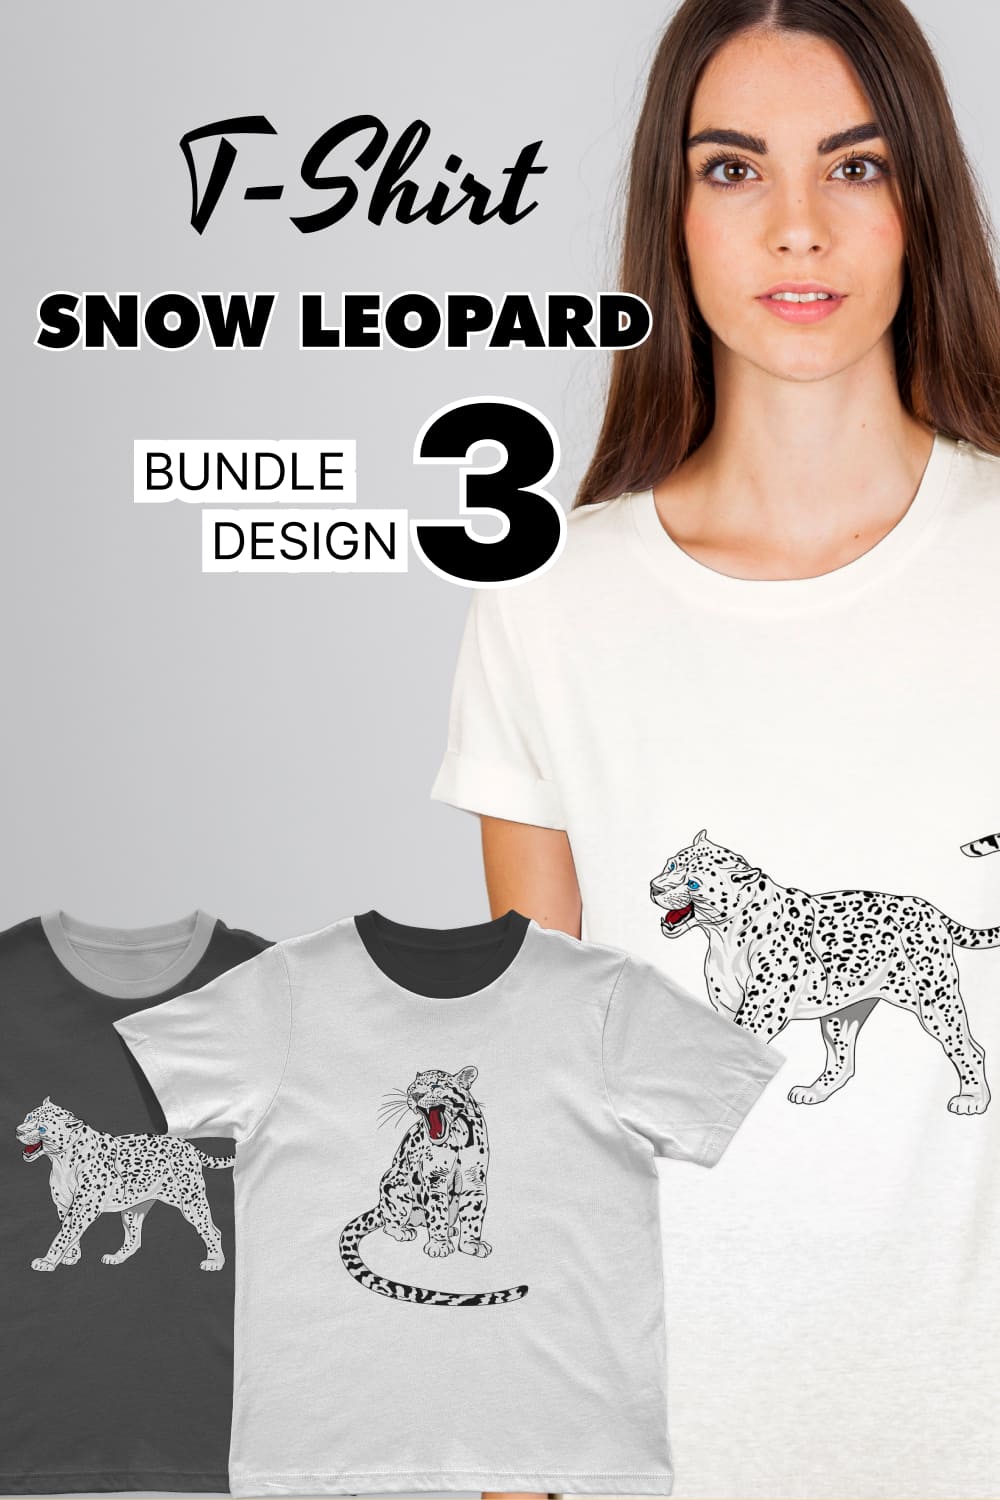 Snow leopard SVG, picture for pinterest 1000x1500.